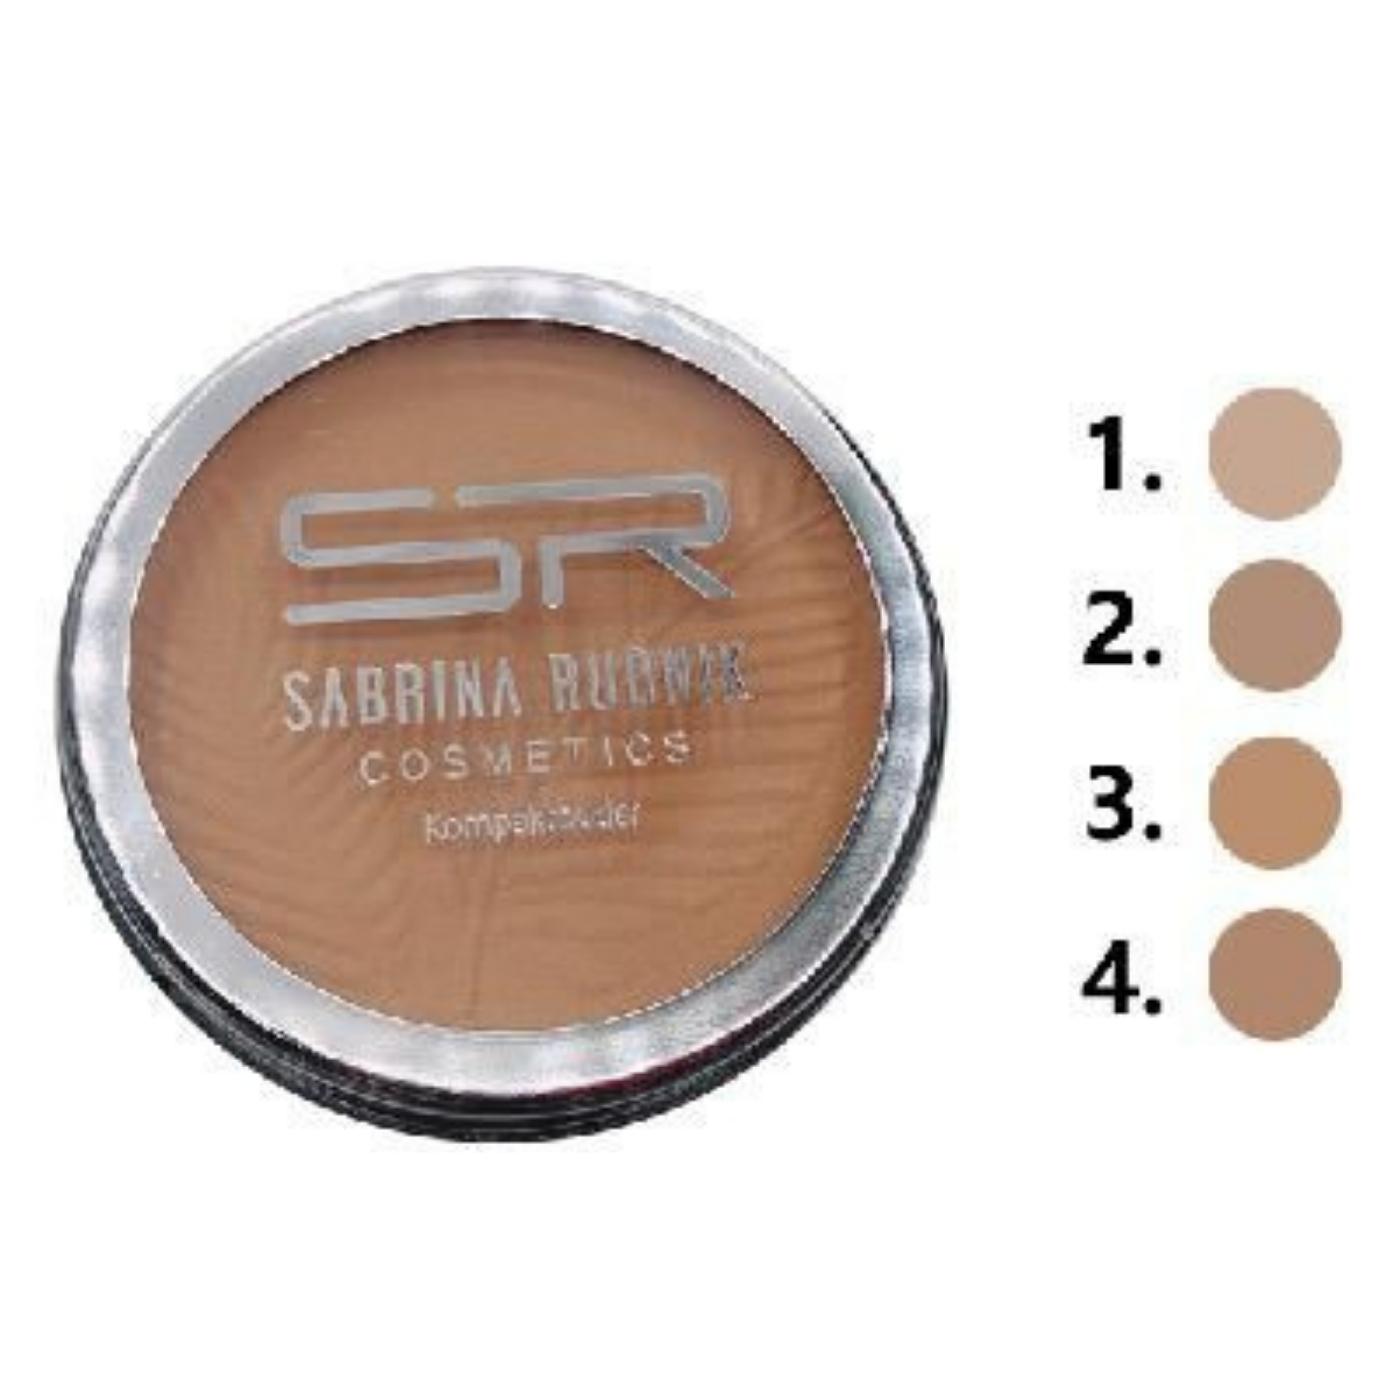 Sabrina Rudnik Kompaktpuder, Compact Powder - Puder Makeup